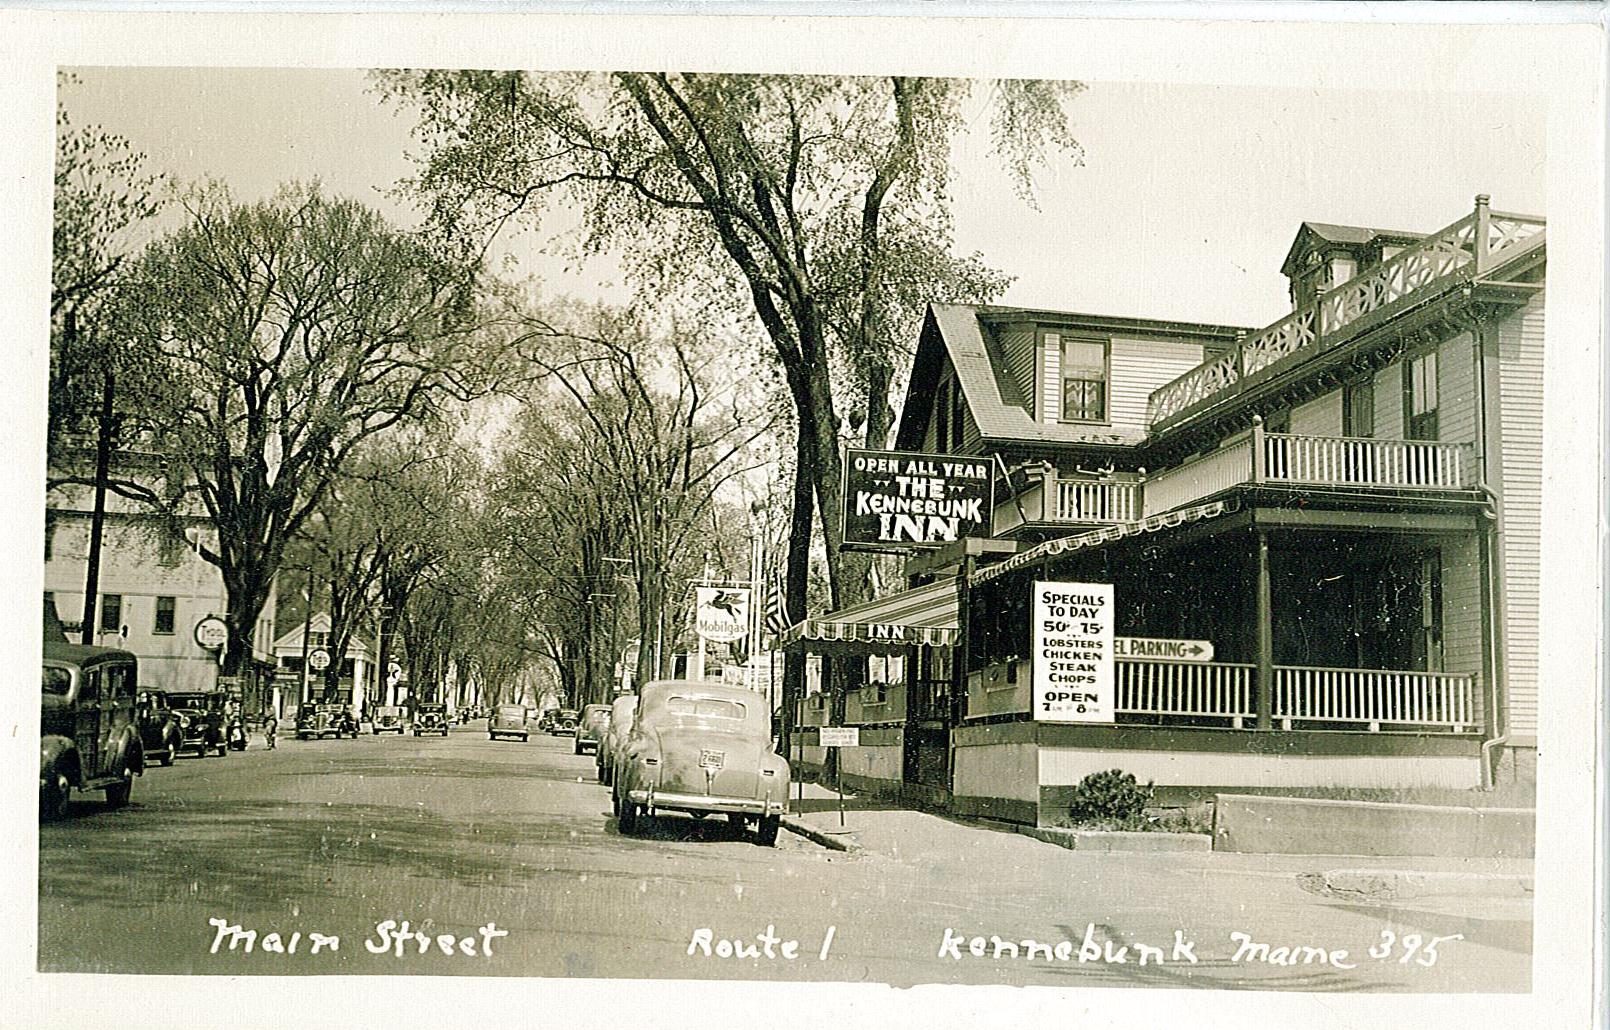 Kennebunk Inn, c.1930